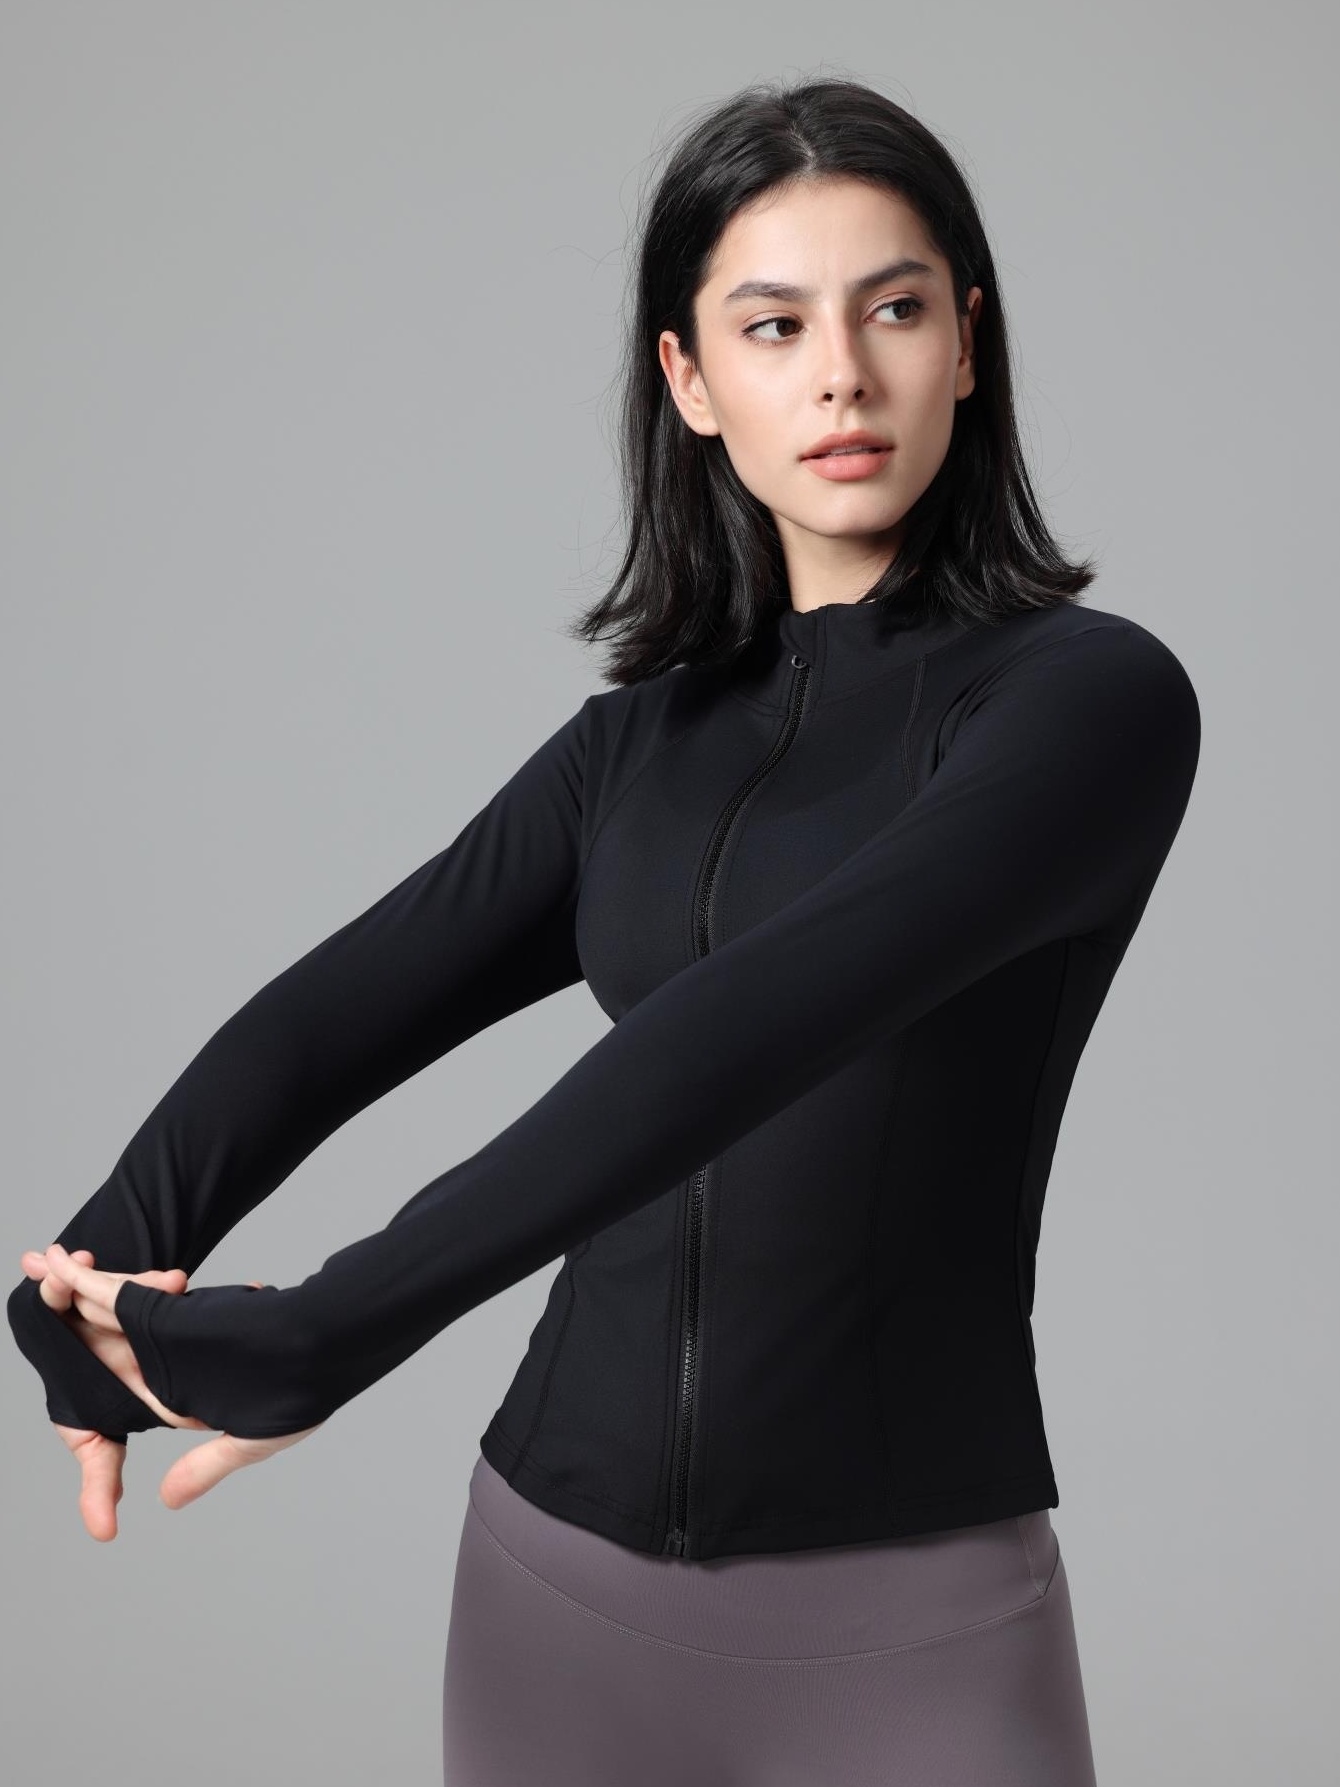 Custom Yoga Wear Half Zipper Sports Top Women Jackets Tight